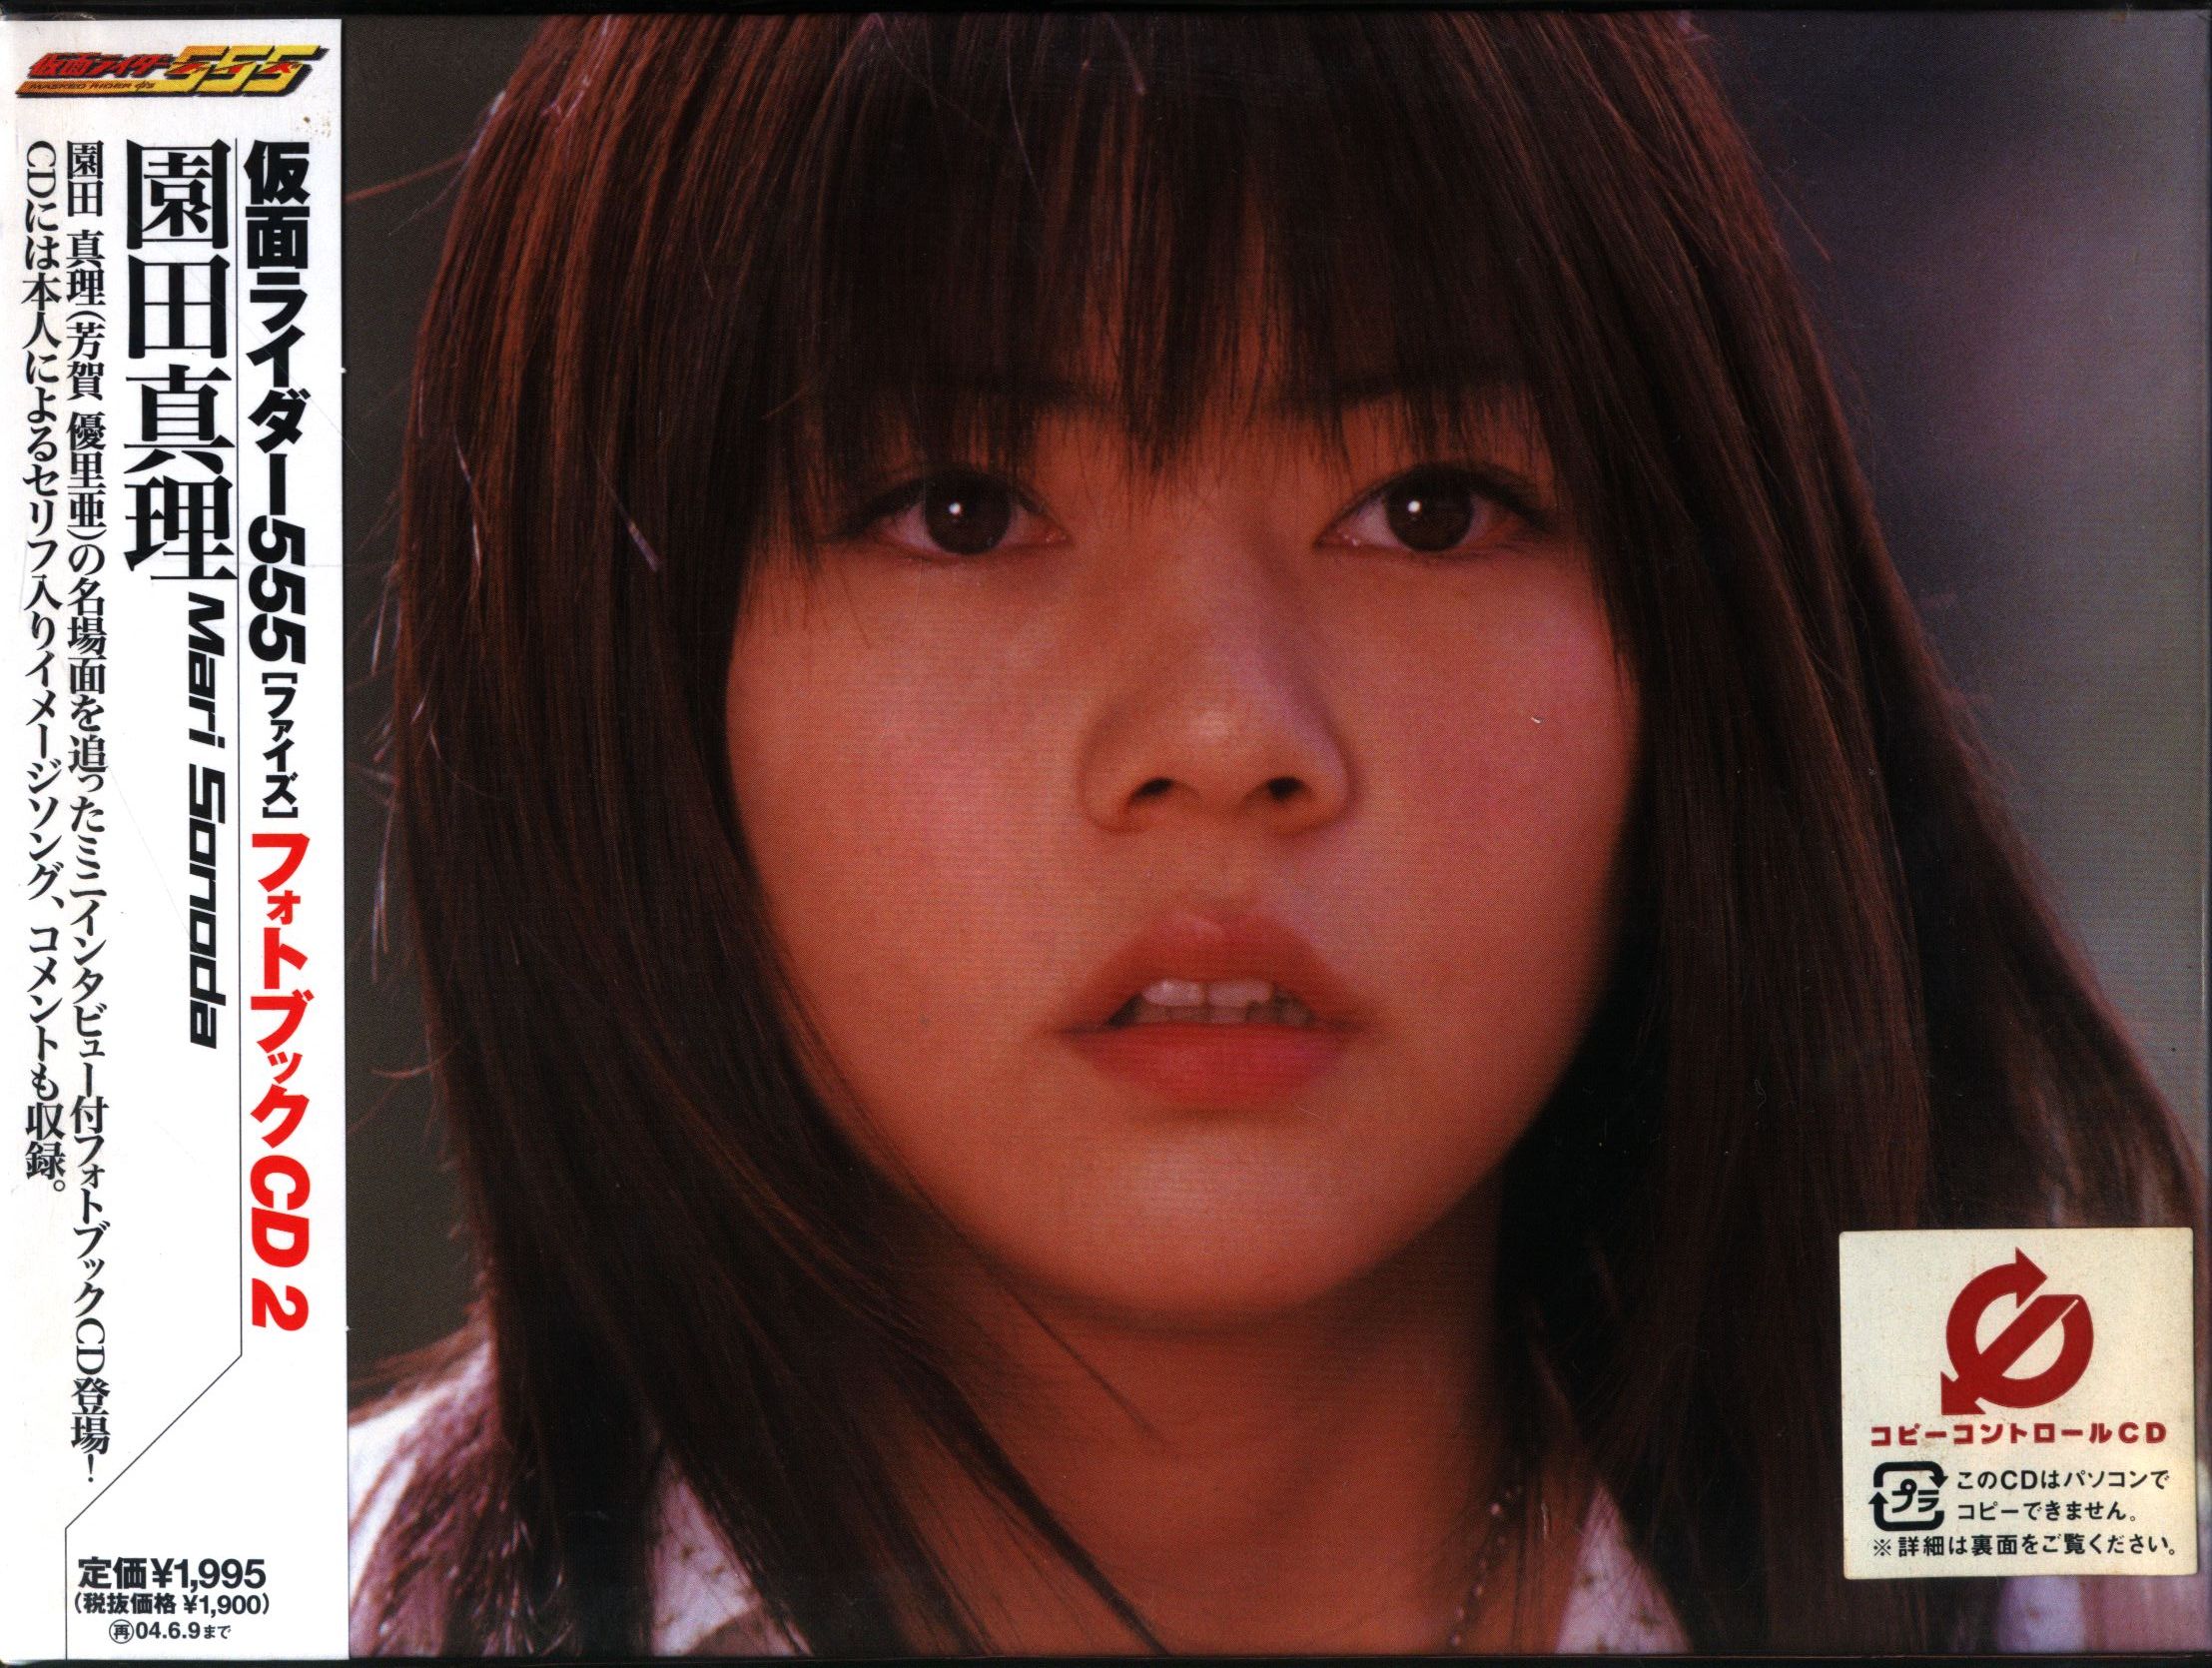 Tokusatsu CD Mari Sonoda (Yuria Haga) Kamen Rider 555 Photobook CD